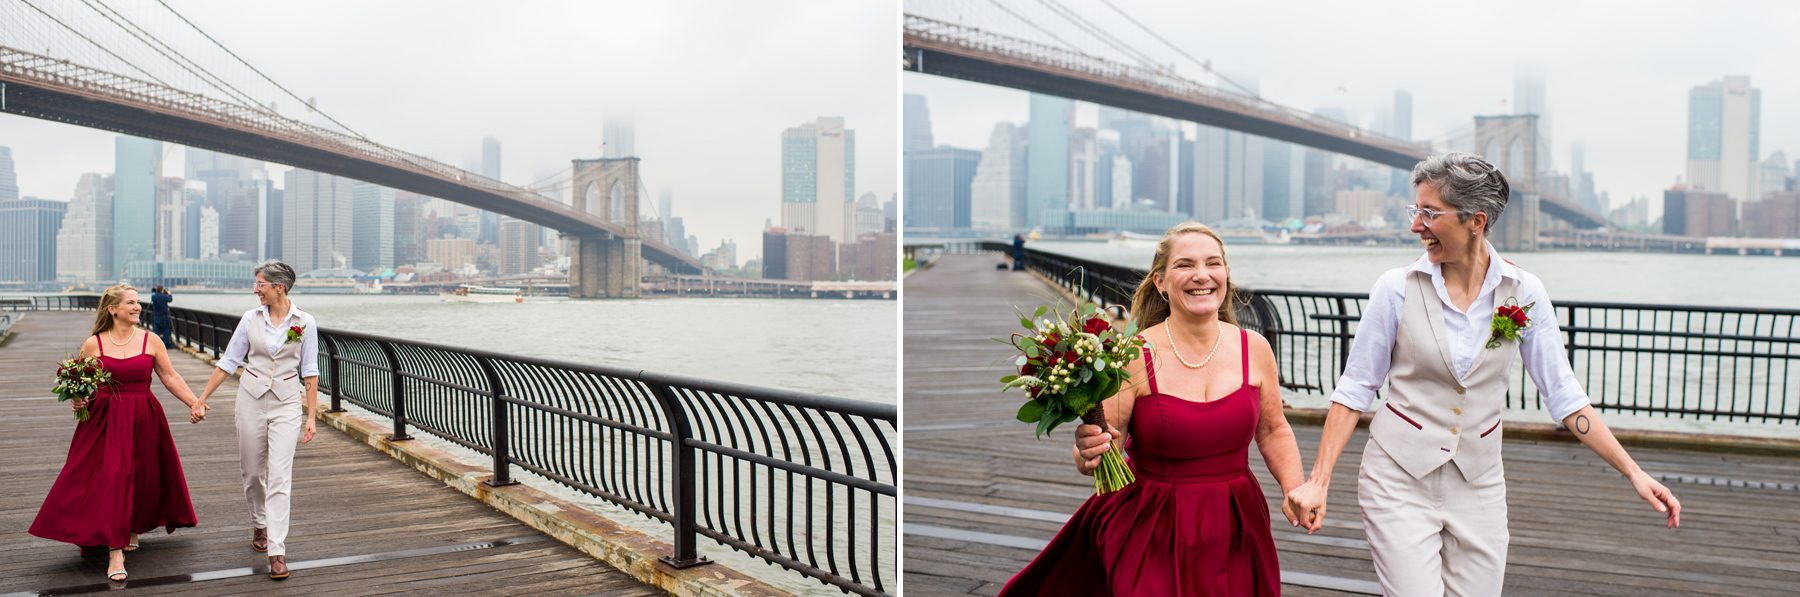 Offbeat Brooklyn Wedding Photos